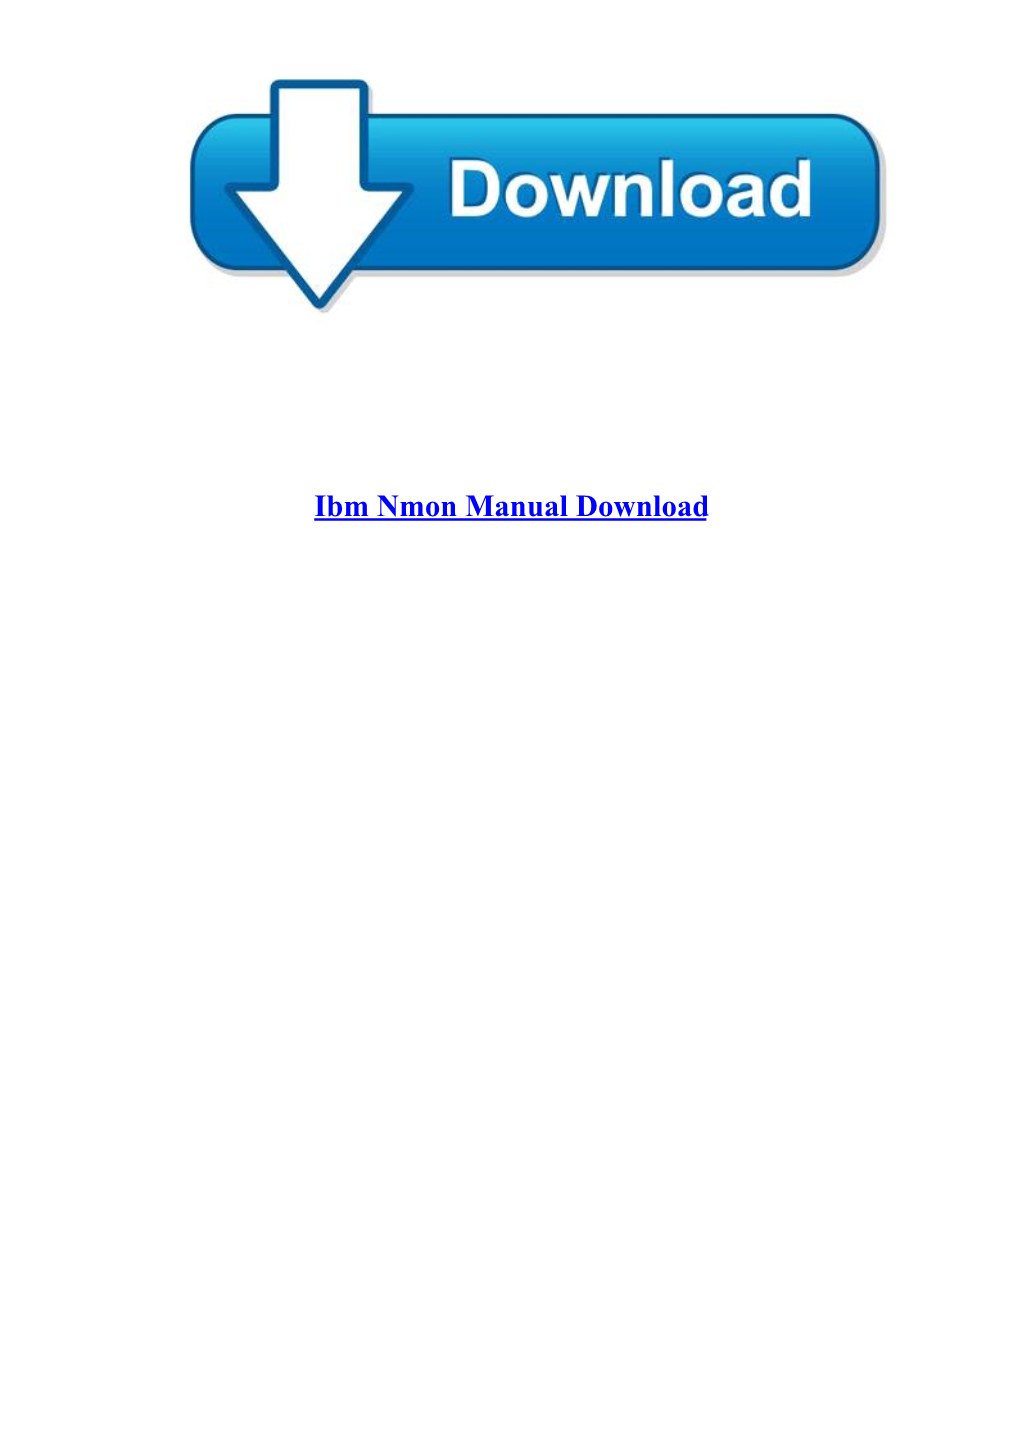 Ibm Nmon Manual Download Ibm Nmon Manual